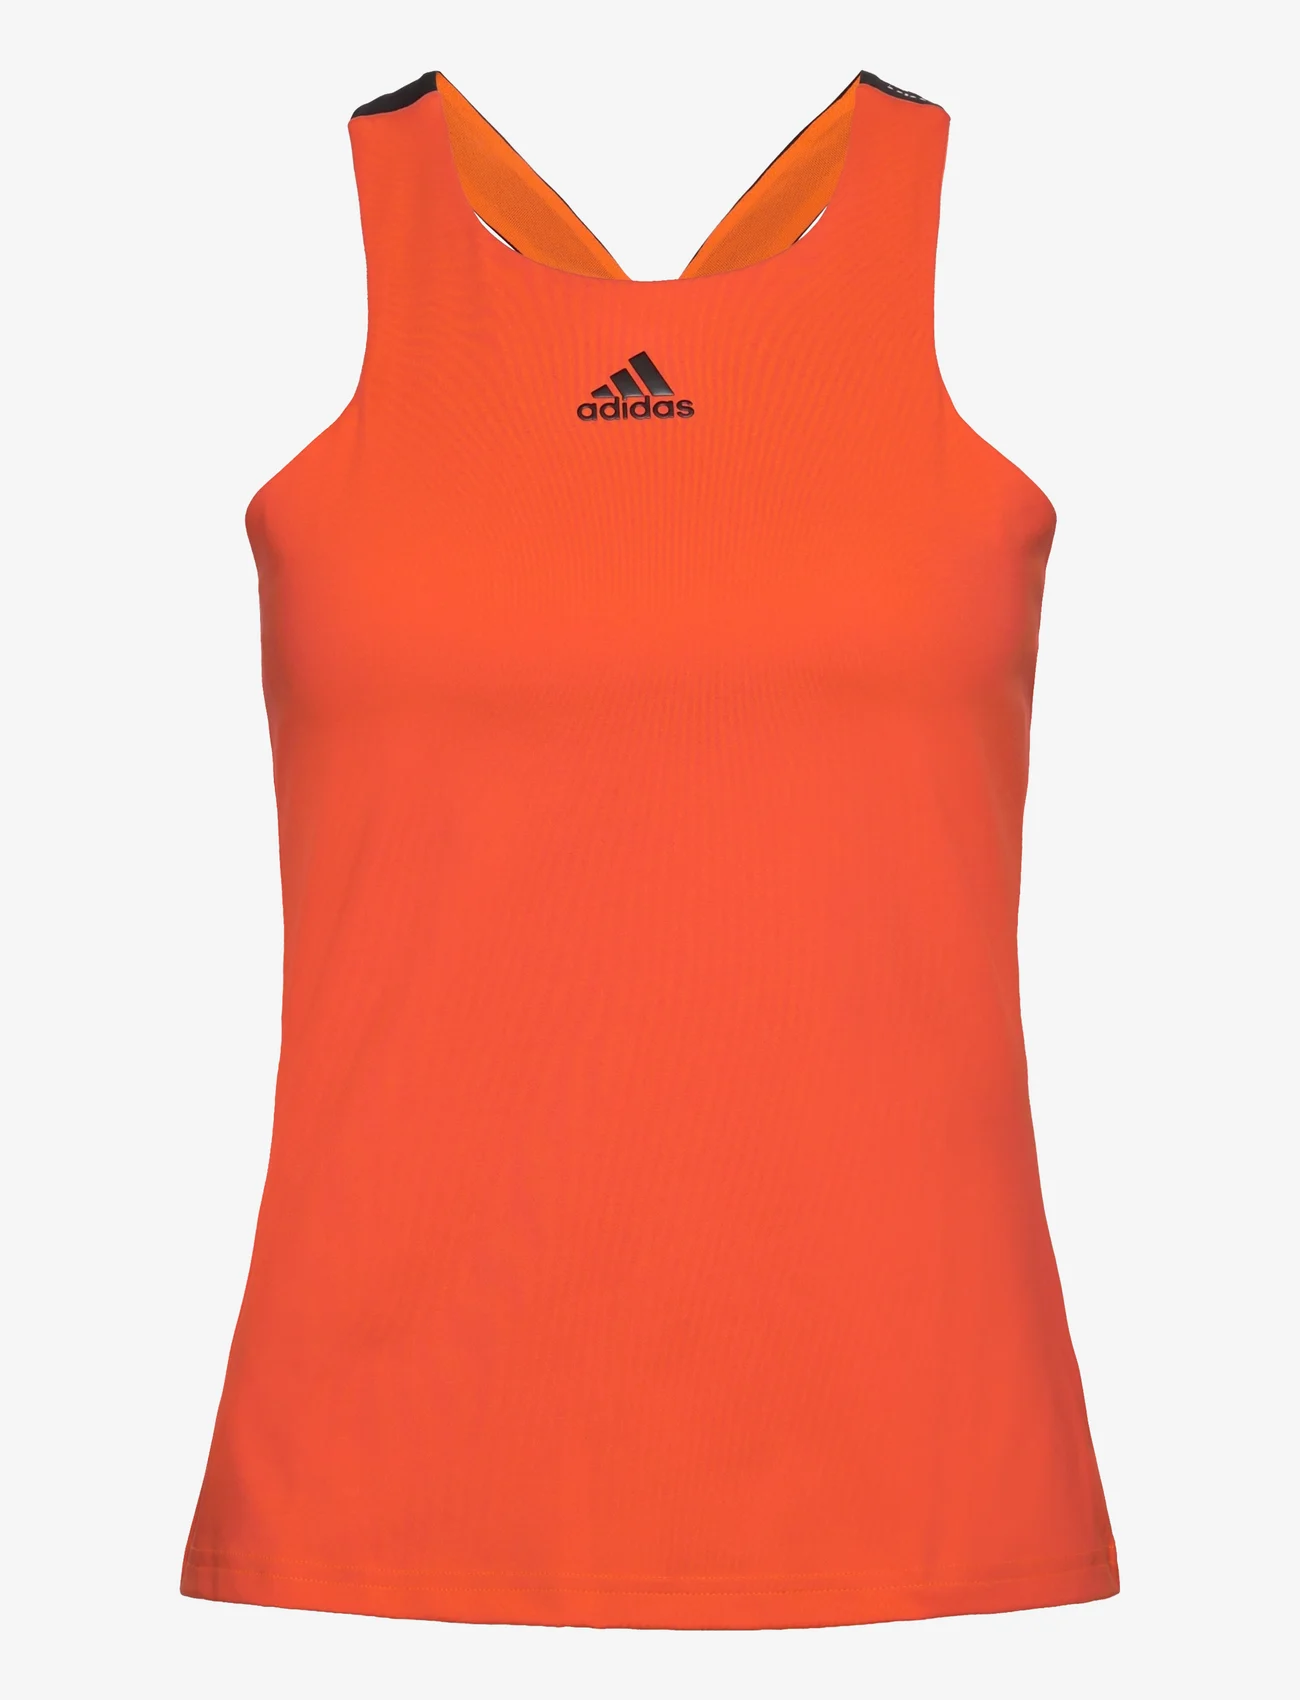 adidas Performance - MATCH Y-TANK - t-shirt & tops - 000/orange - 0